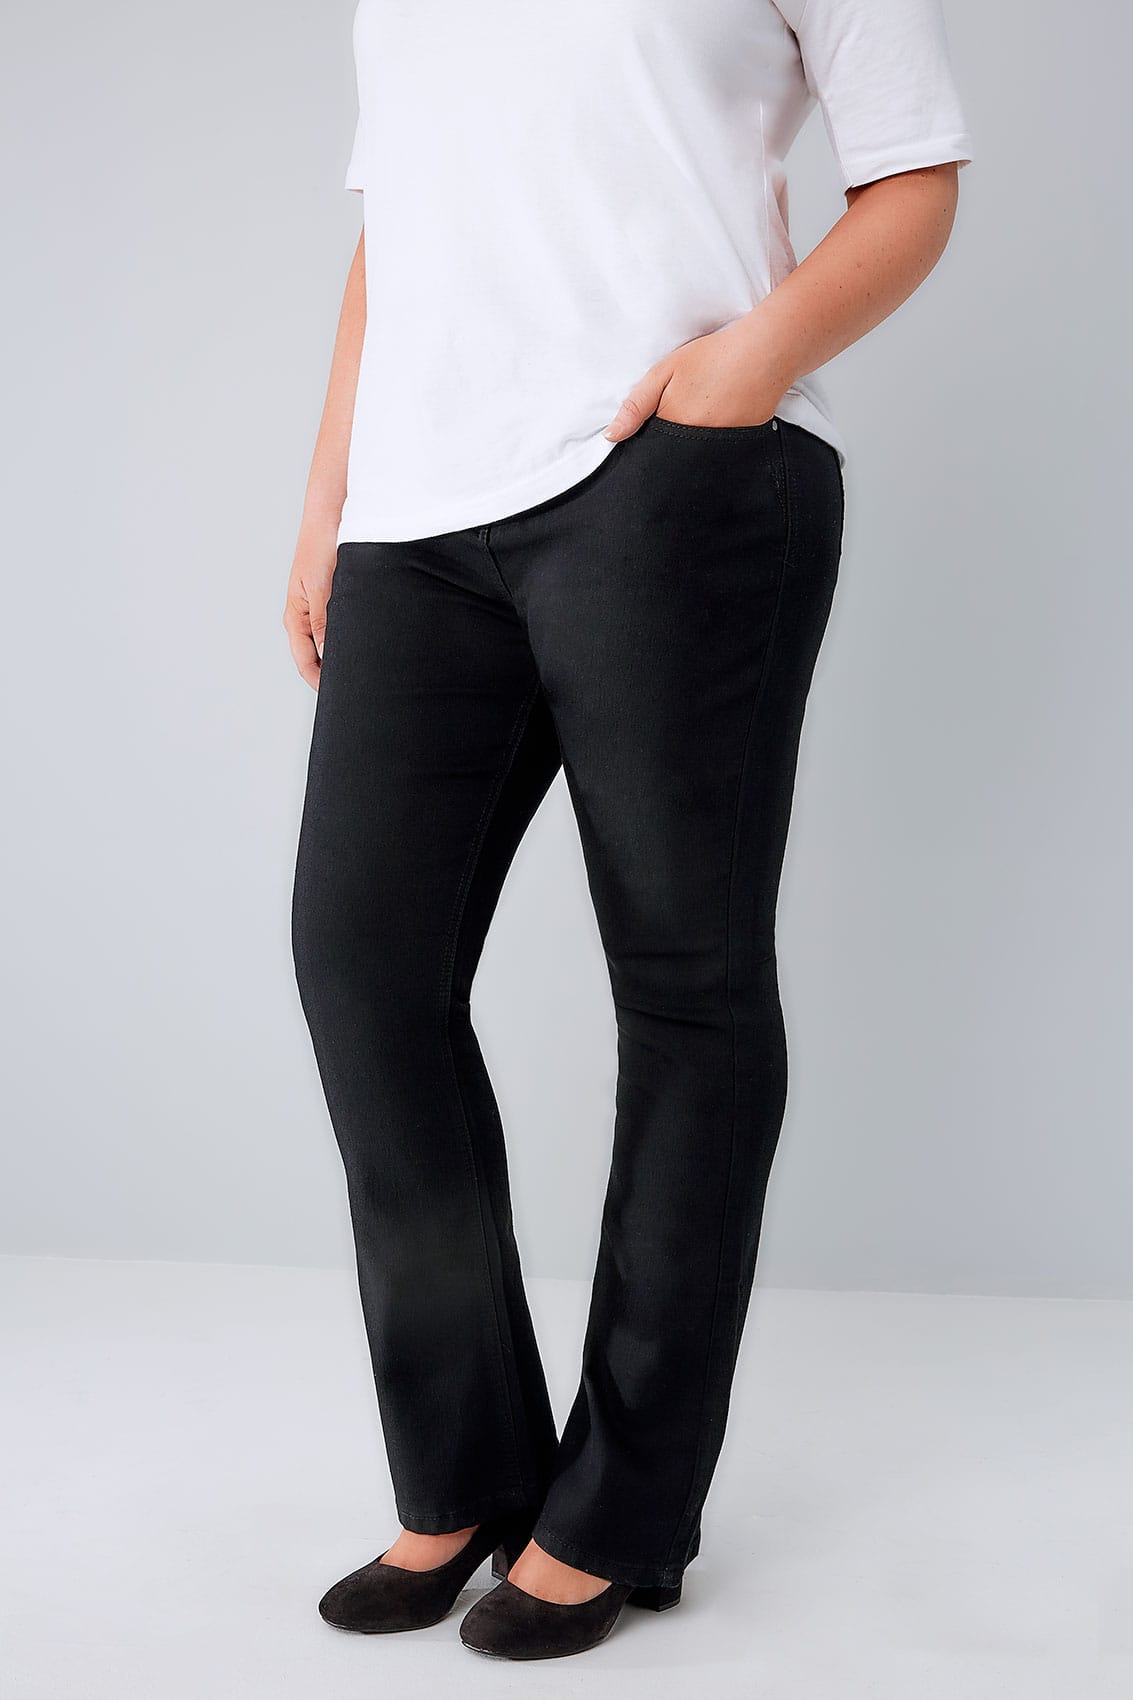 Black Bootcut 5 Pocket Jeans Plus Size 16 to 32